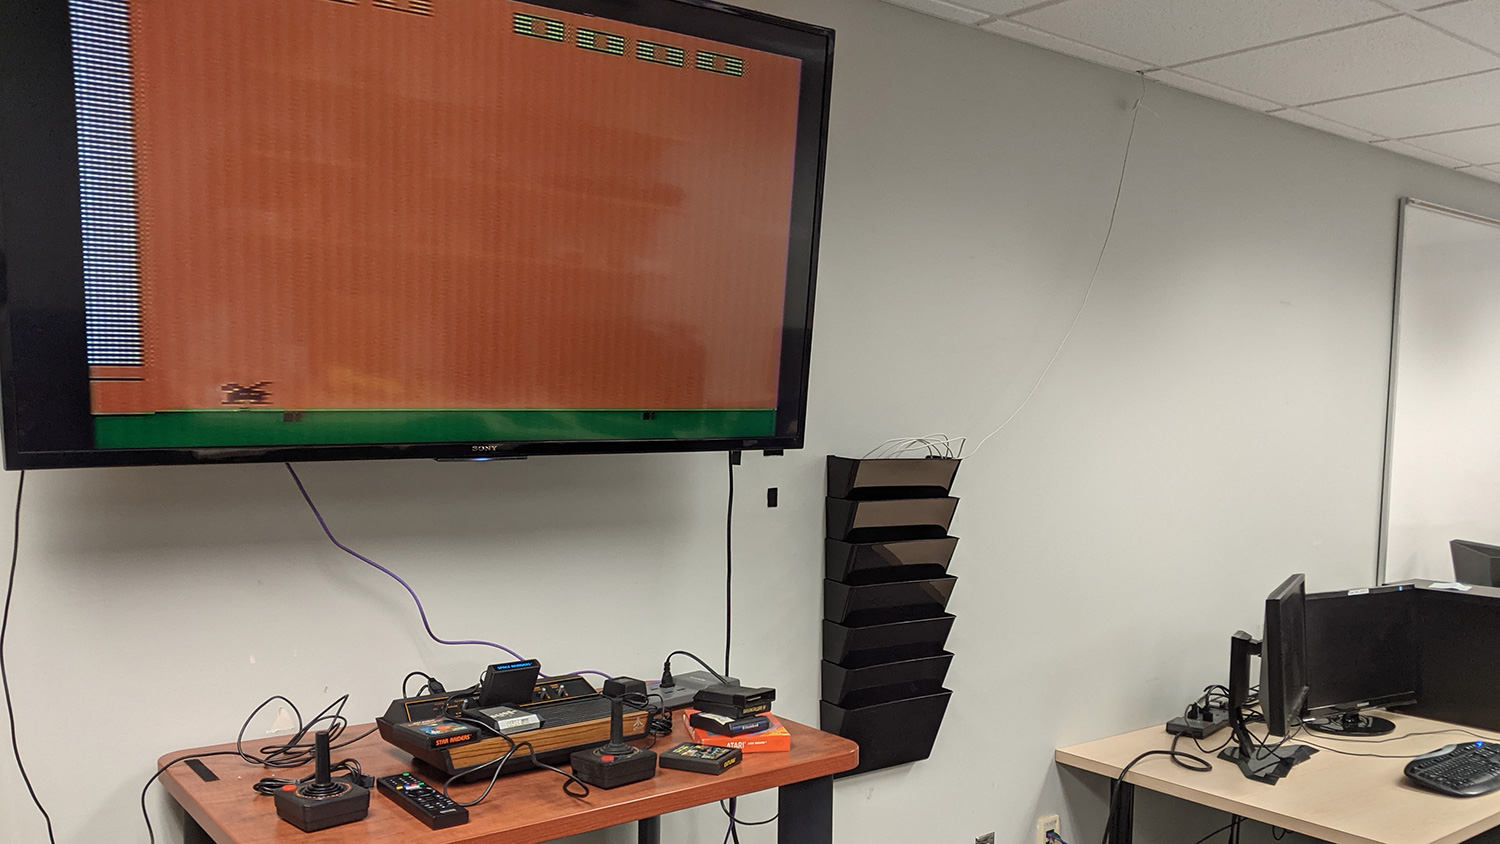 Lab with an Atari 2600 on a flat screen TV.